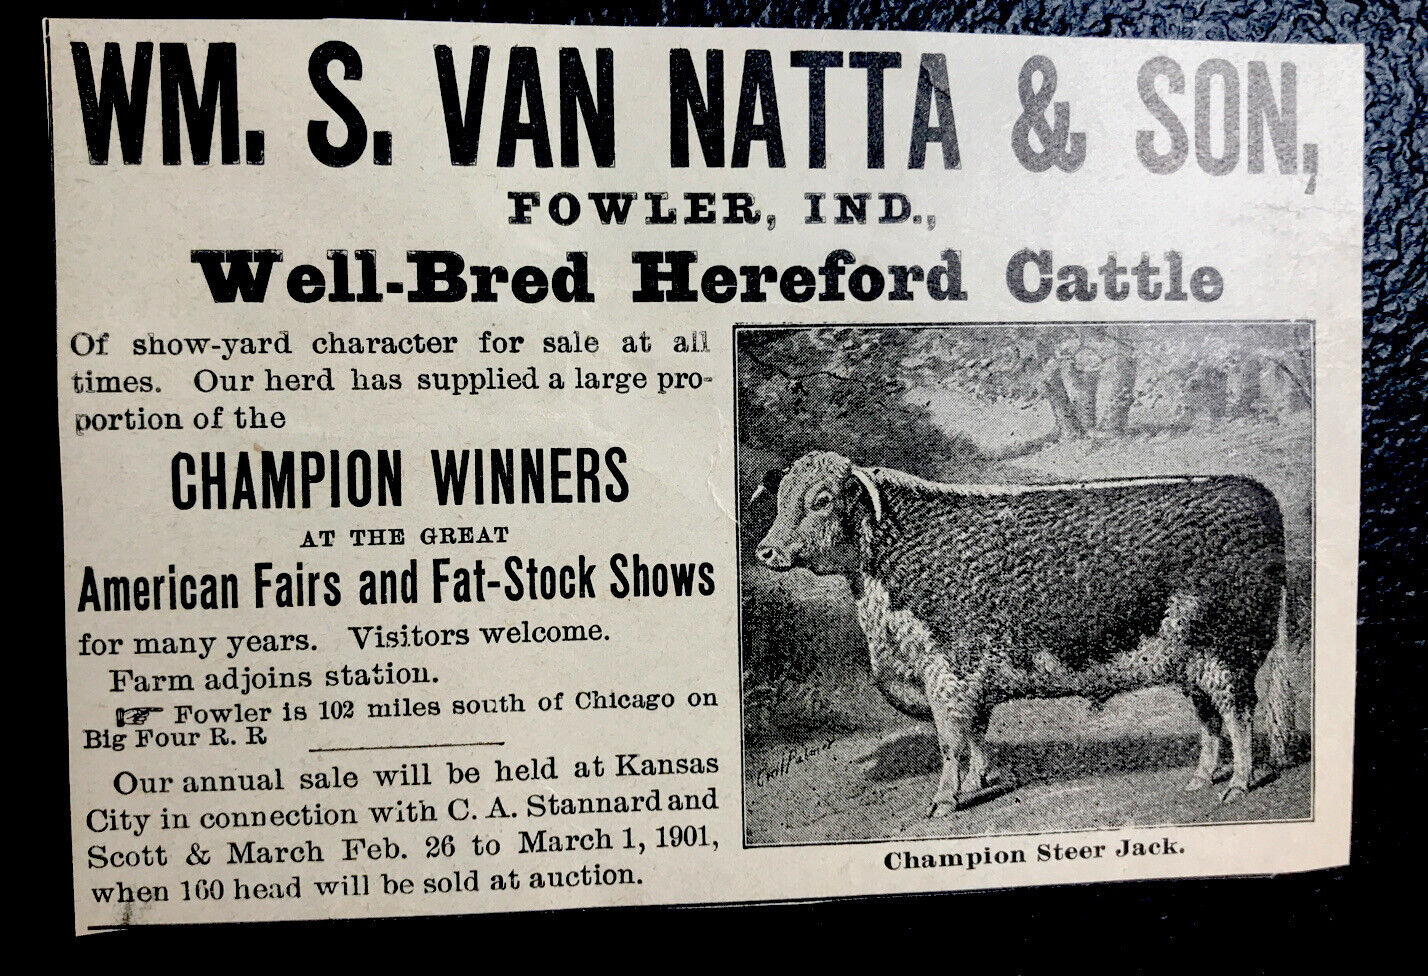 1900 Van Natta & Son Farm Cattle Advertising - Fowler - Indiana - Cow